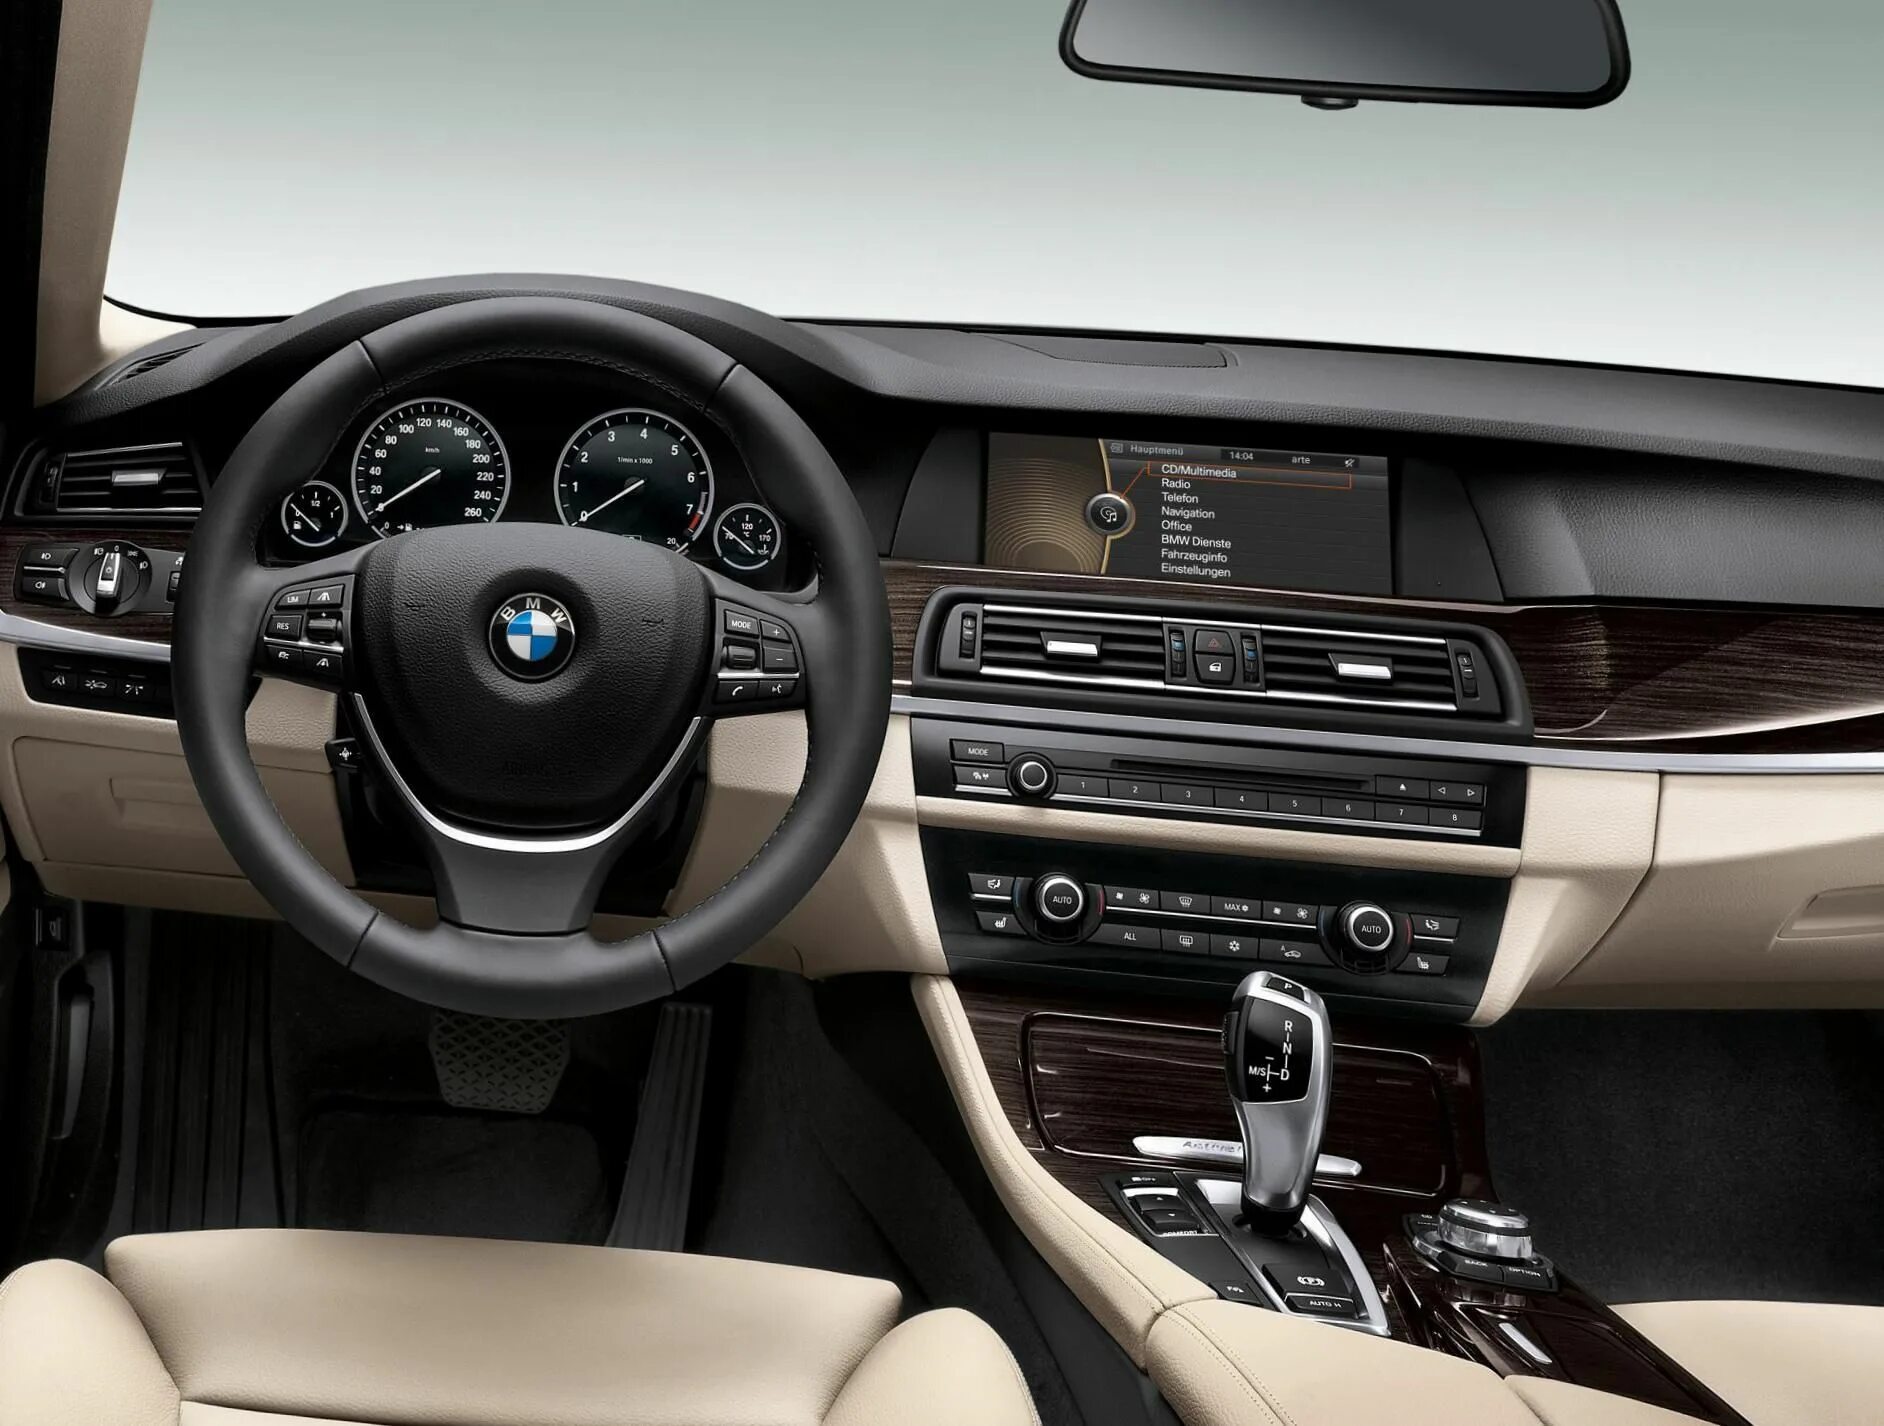 BMW 5 2014. BMW 5 Series 2013. BMW 5-Series, 2012 f10. BMW 5 2014 салон.